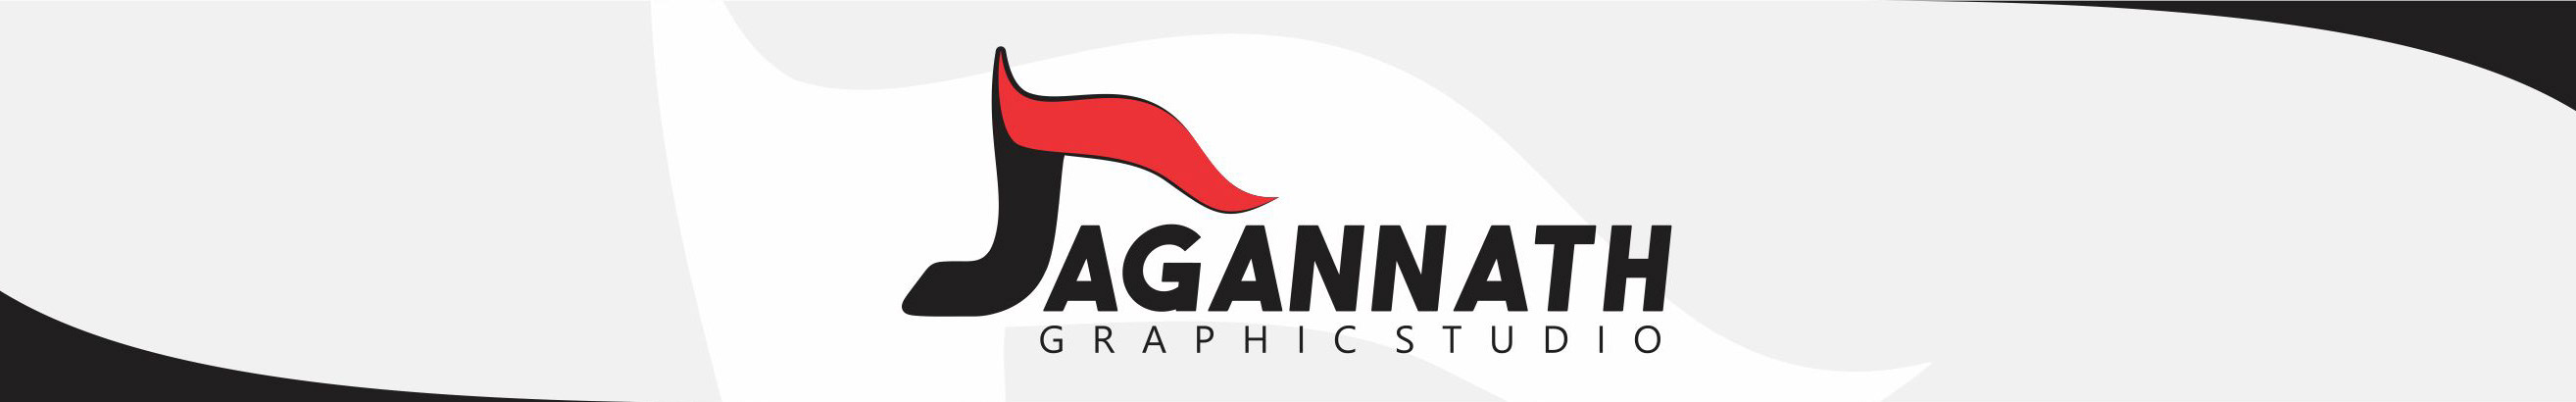 Jagannath Graphic studio's profile banner